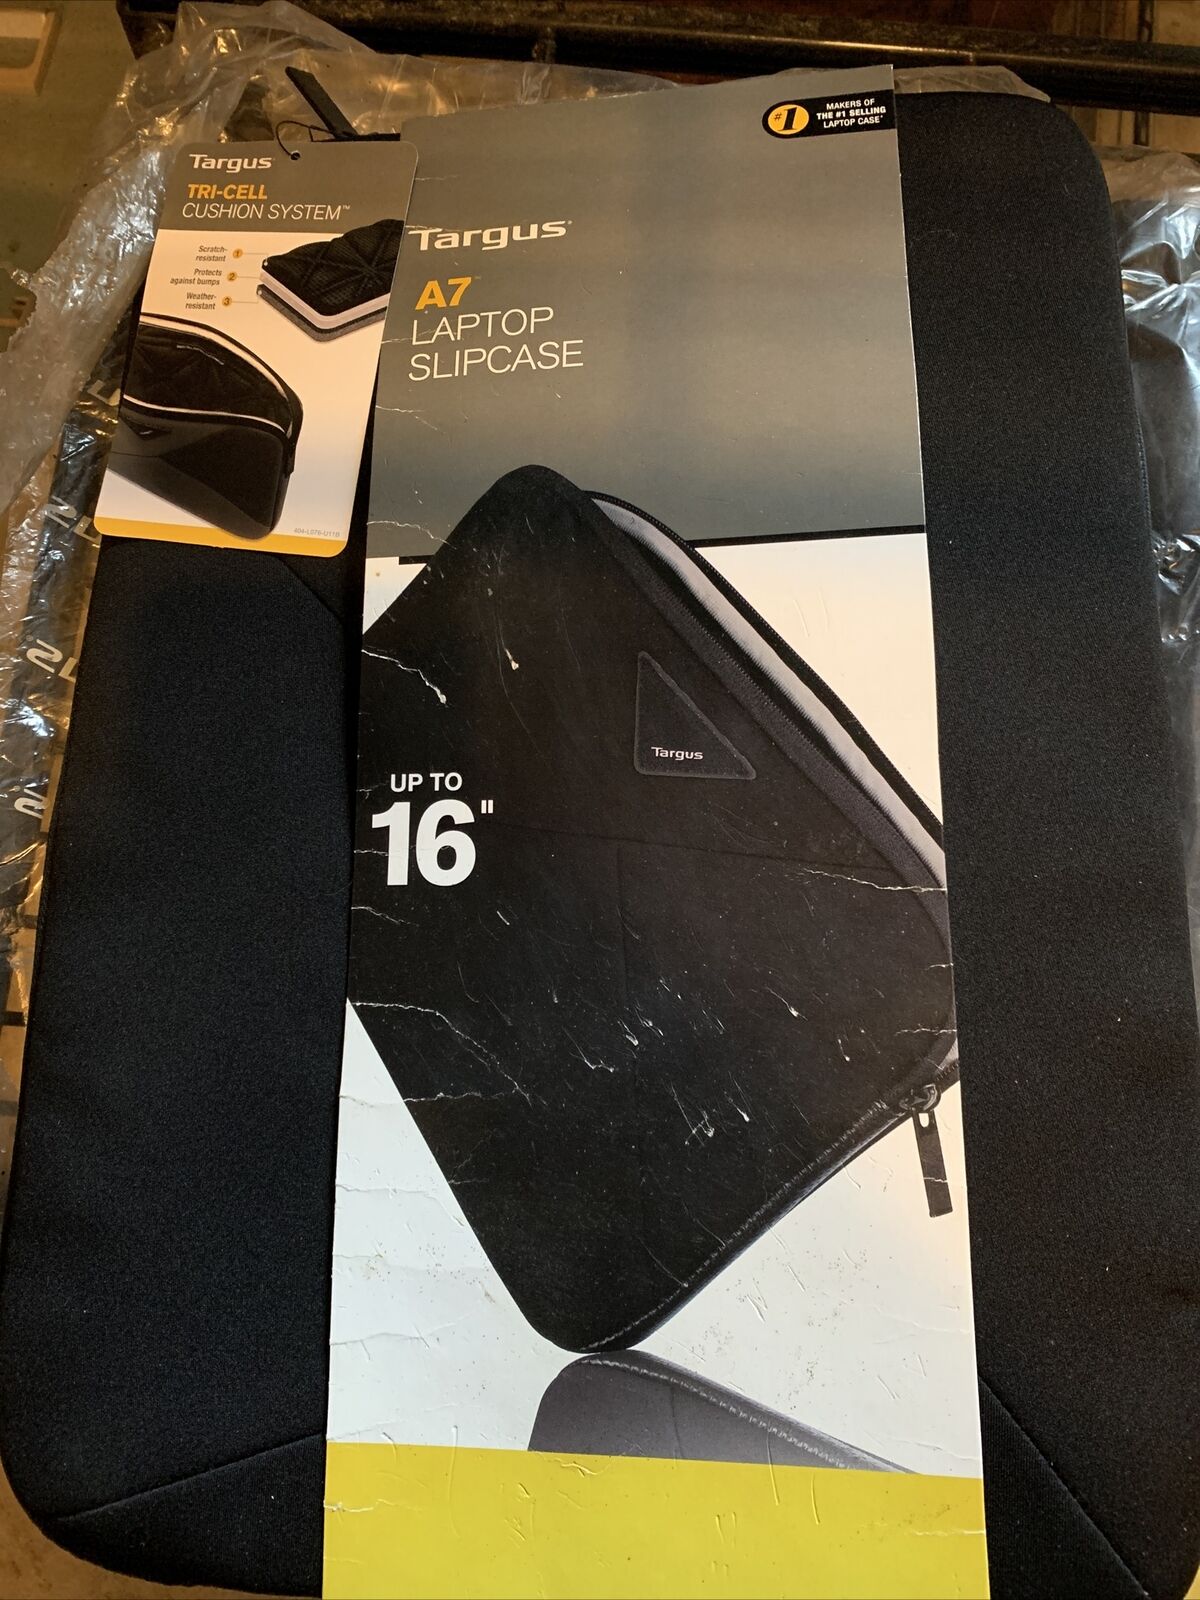 New up to 16” Laptop Slipcase protective sleeve case Black Neoprene Targus A7